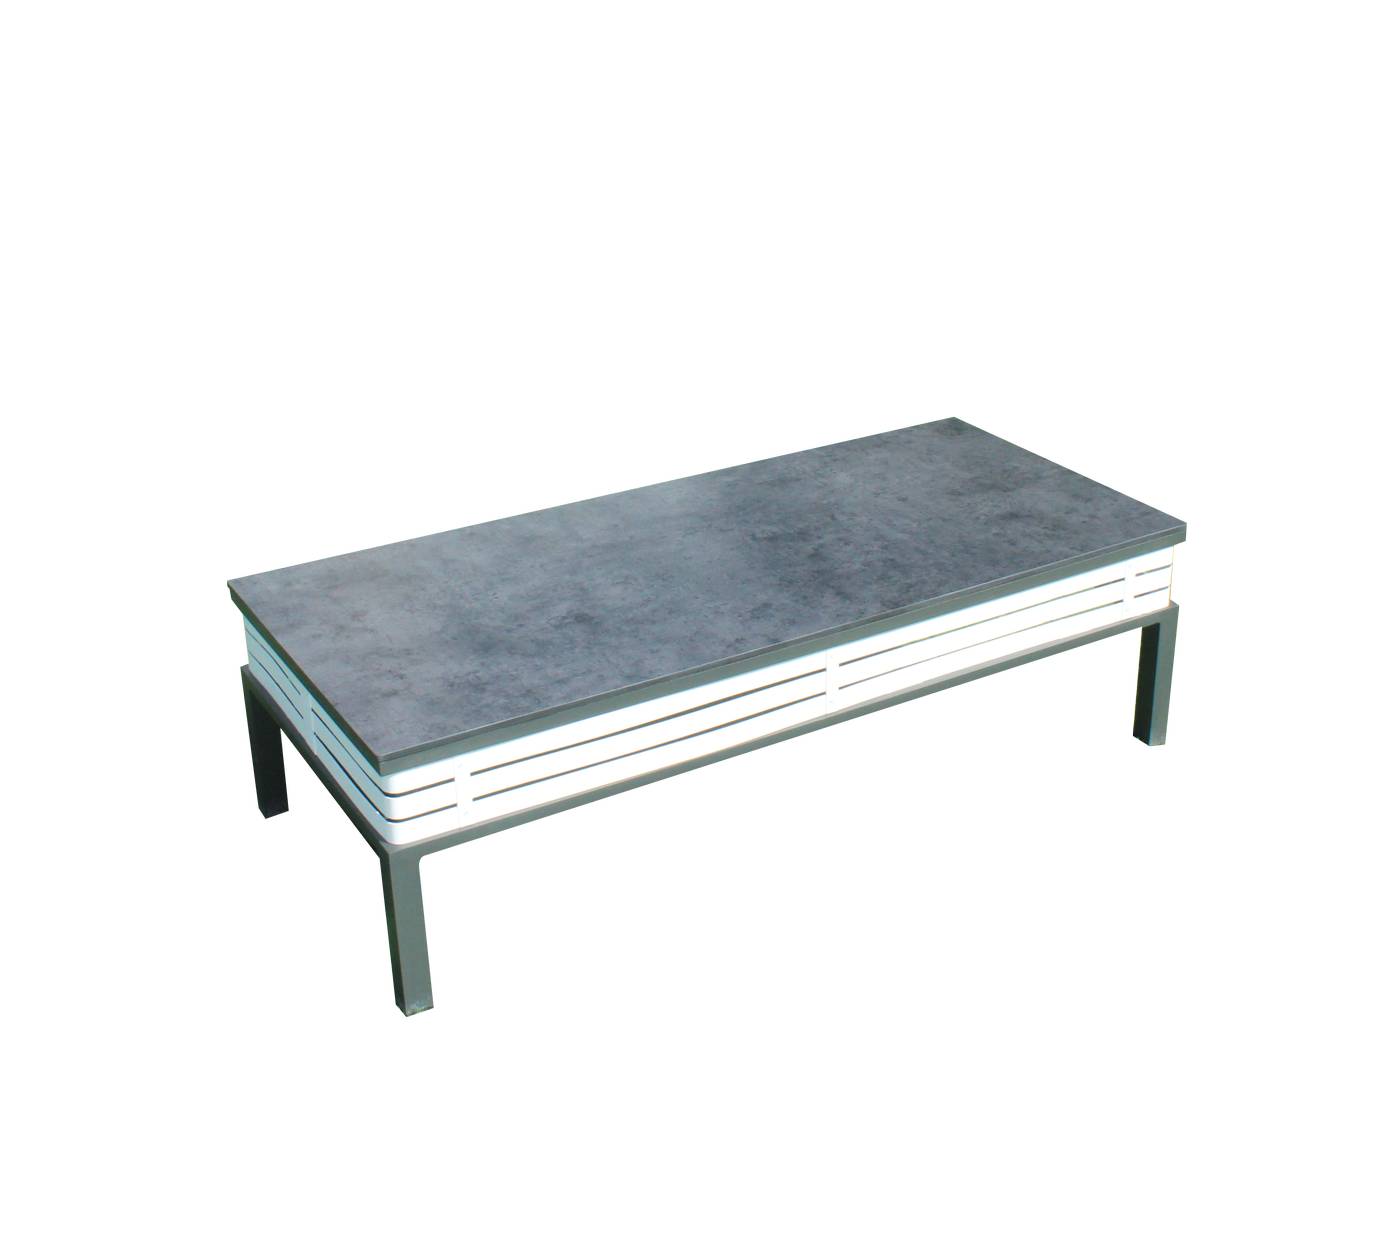 Set Aluminio Sira-7 - Coqueto conjunto de alumnio bicolor: 1 sofá de 2 plazas + 2 sillones + 1 mesa de centro.